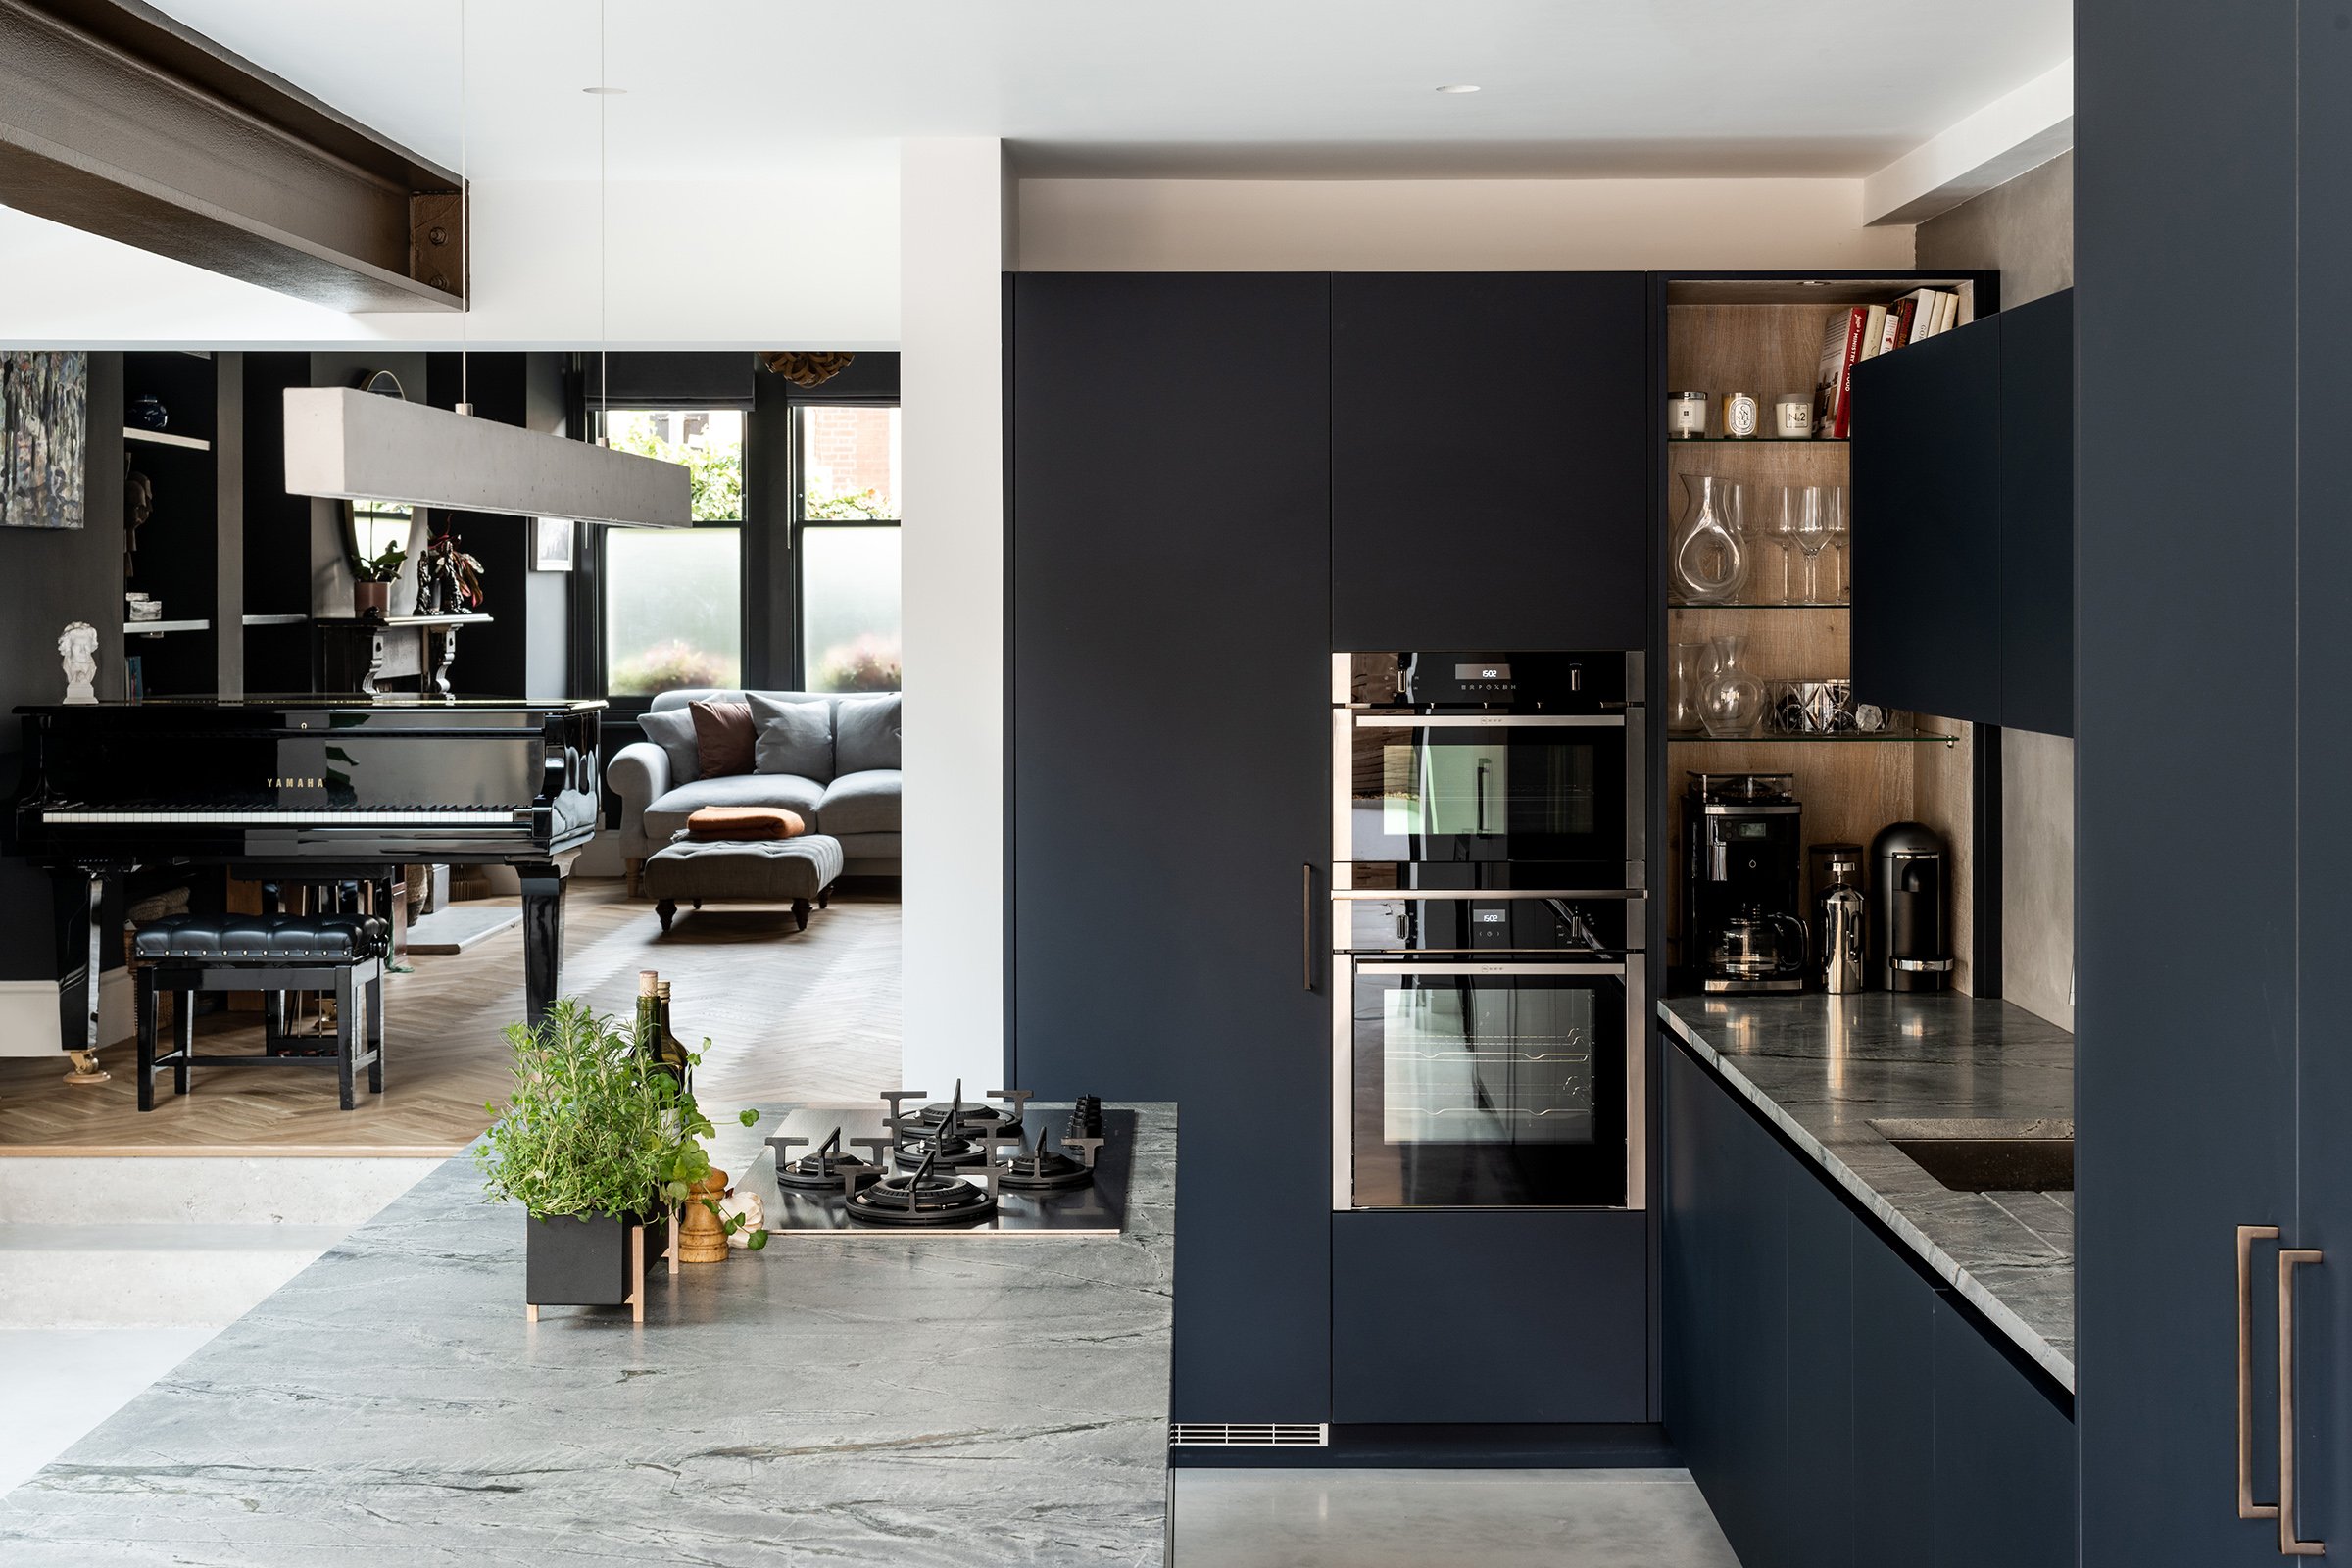 9-mcdowall-road-kitchen-extension-interior-design-architecture-london-uk-rider-stirland-architects.jpg